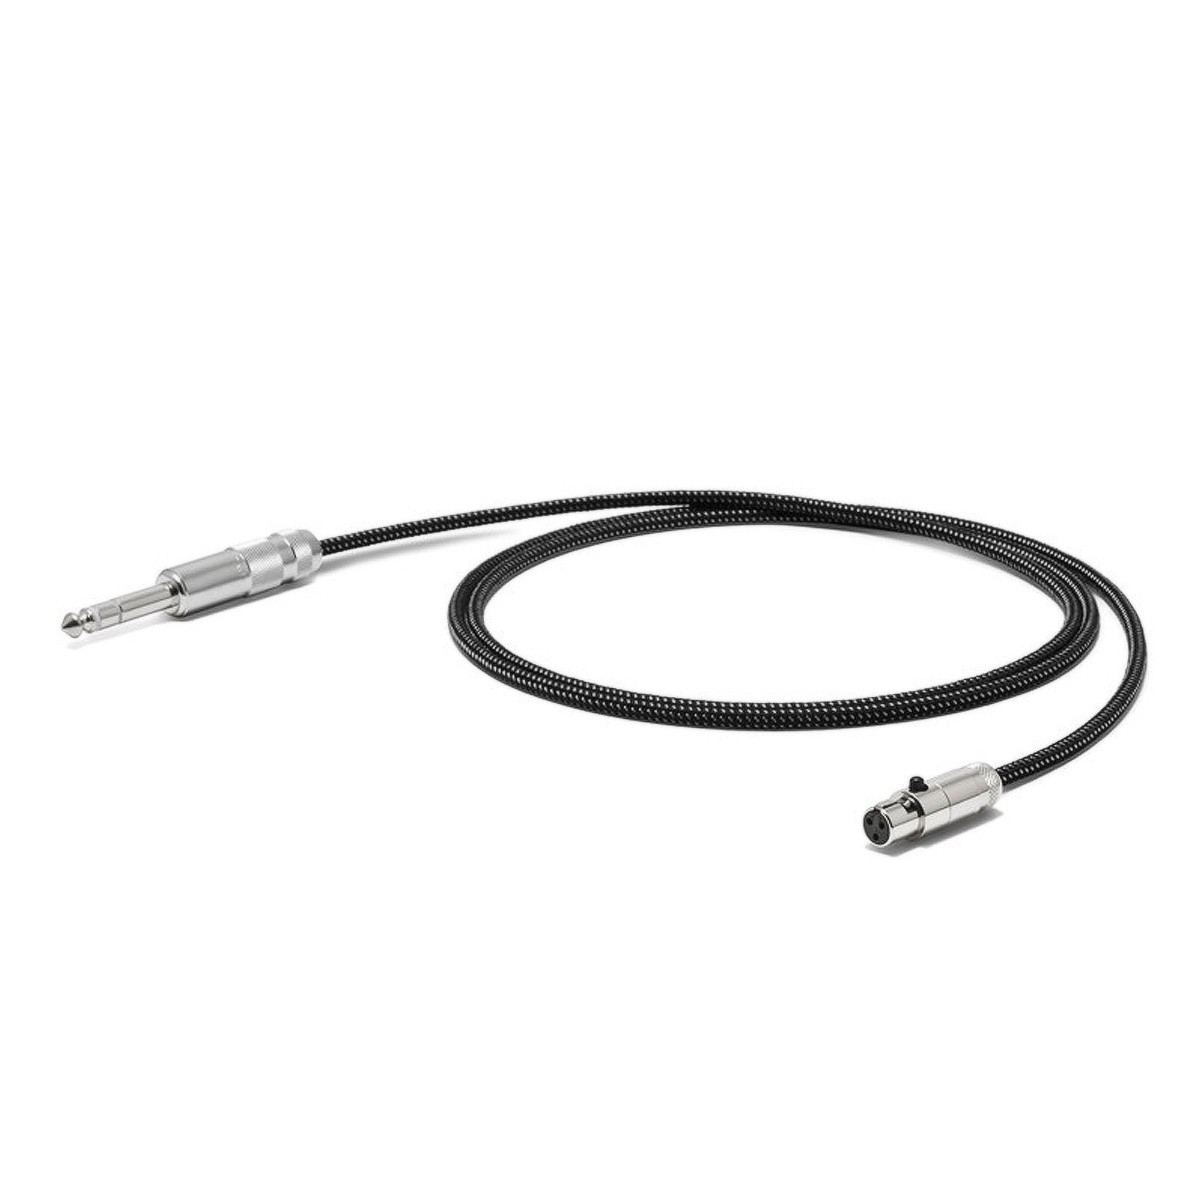 OYAIDE HPSC-X63 Jack 6.35mm to Mini XLR 3 Poles Headphone Cable 1.3m